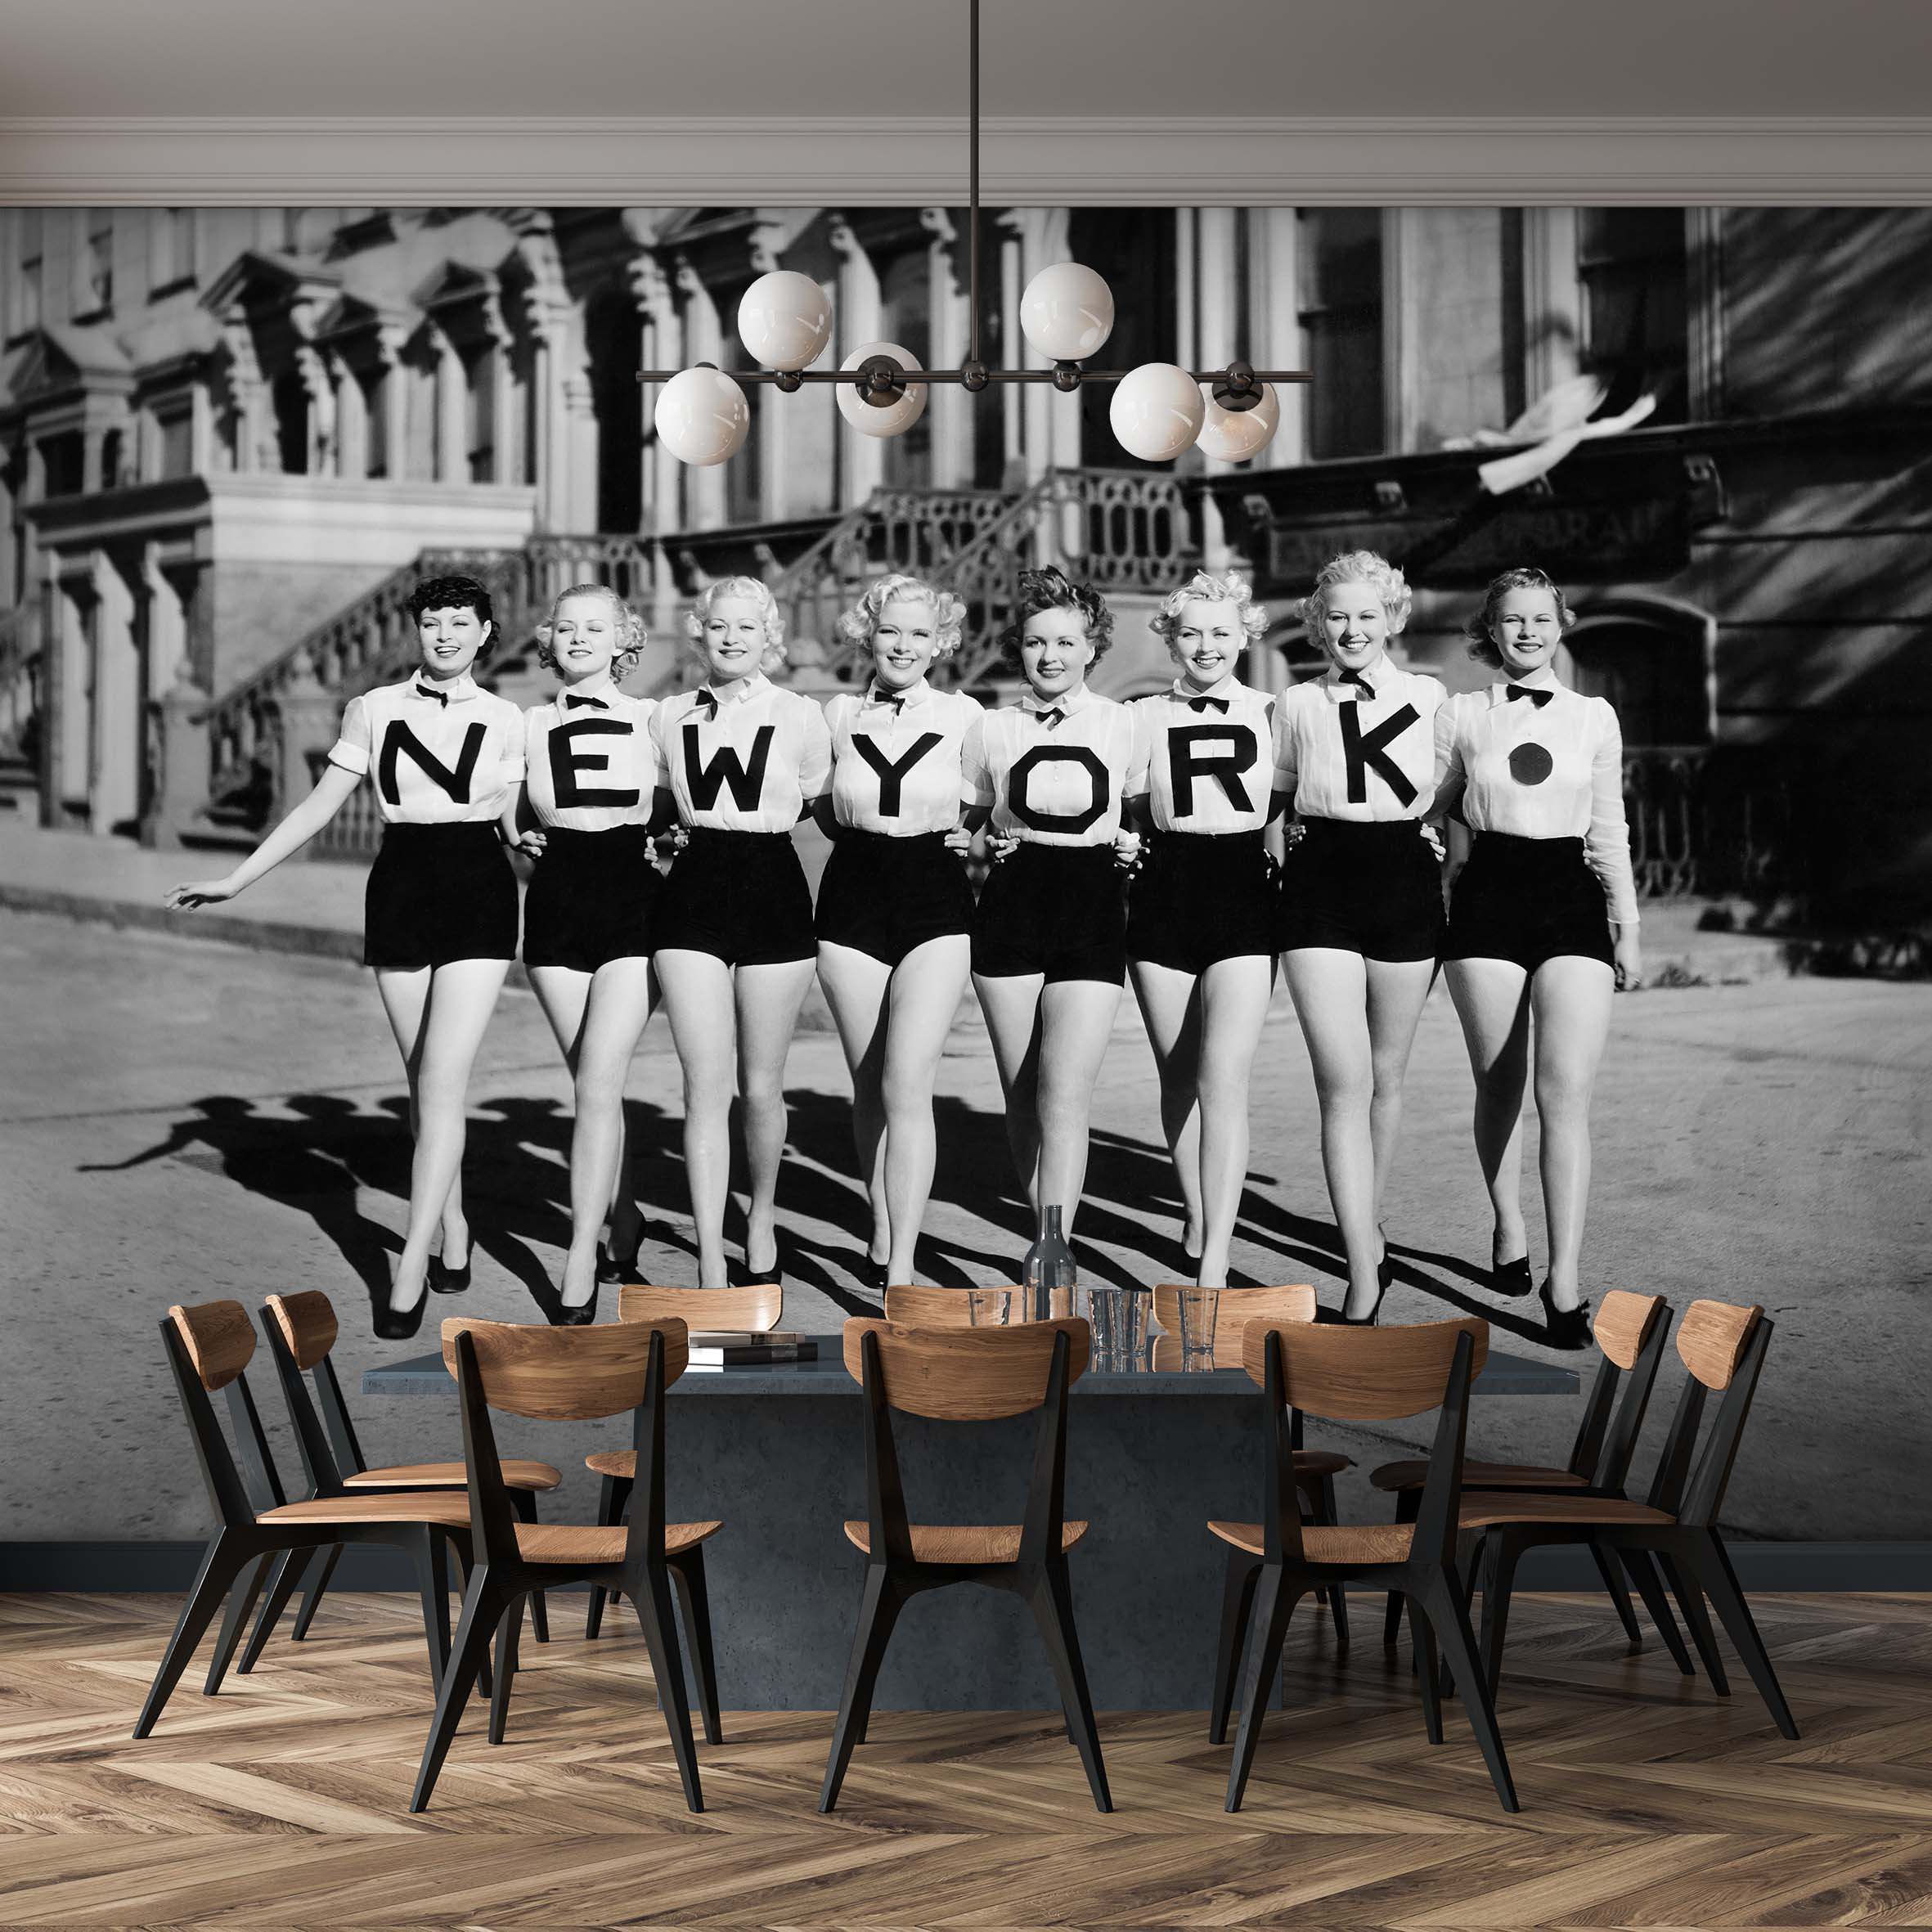 Tapeta New Yorský kabaret Vel (šířka x výška): 216 x 140 cm